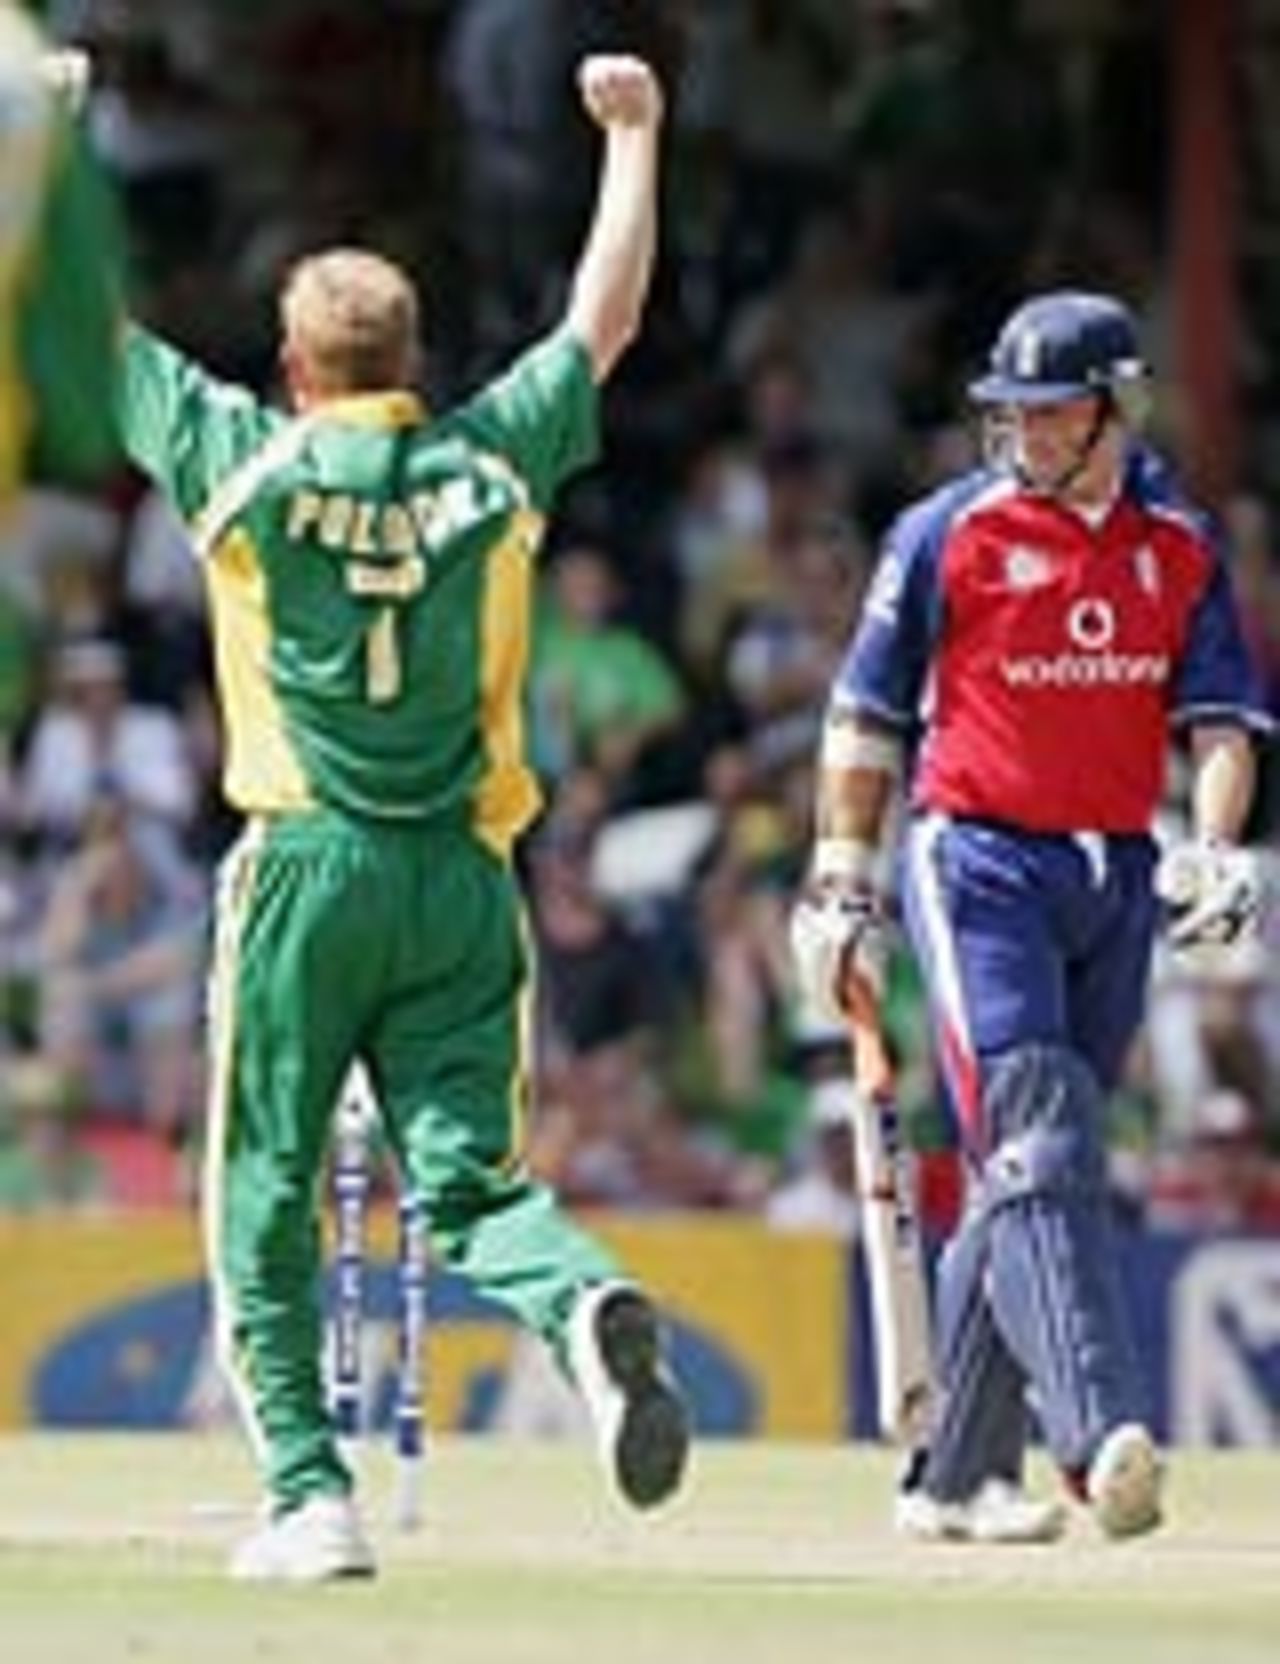 Shaun Pollock dismisses Marcus Trescothick, South Africa v England, 2nd ODI, Blomfontein, February 2, 2005